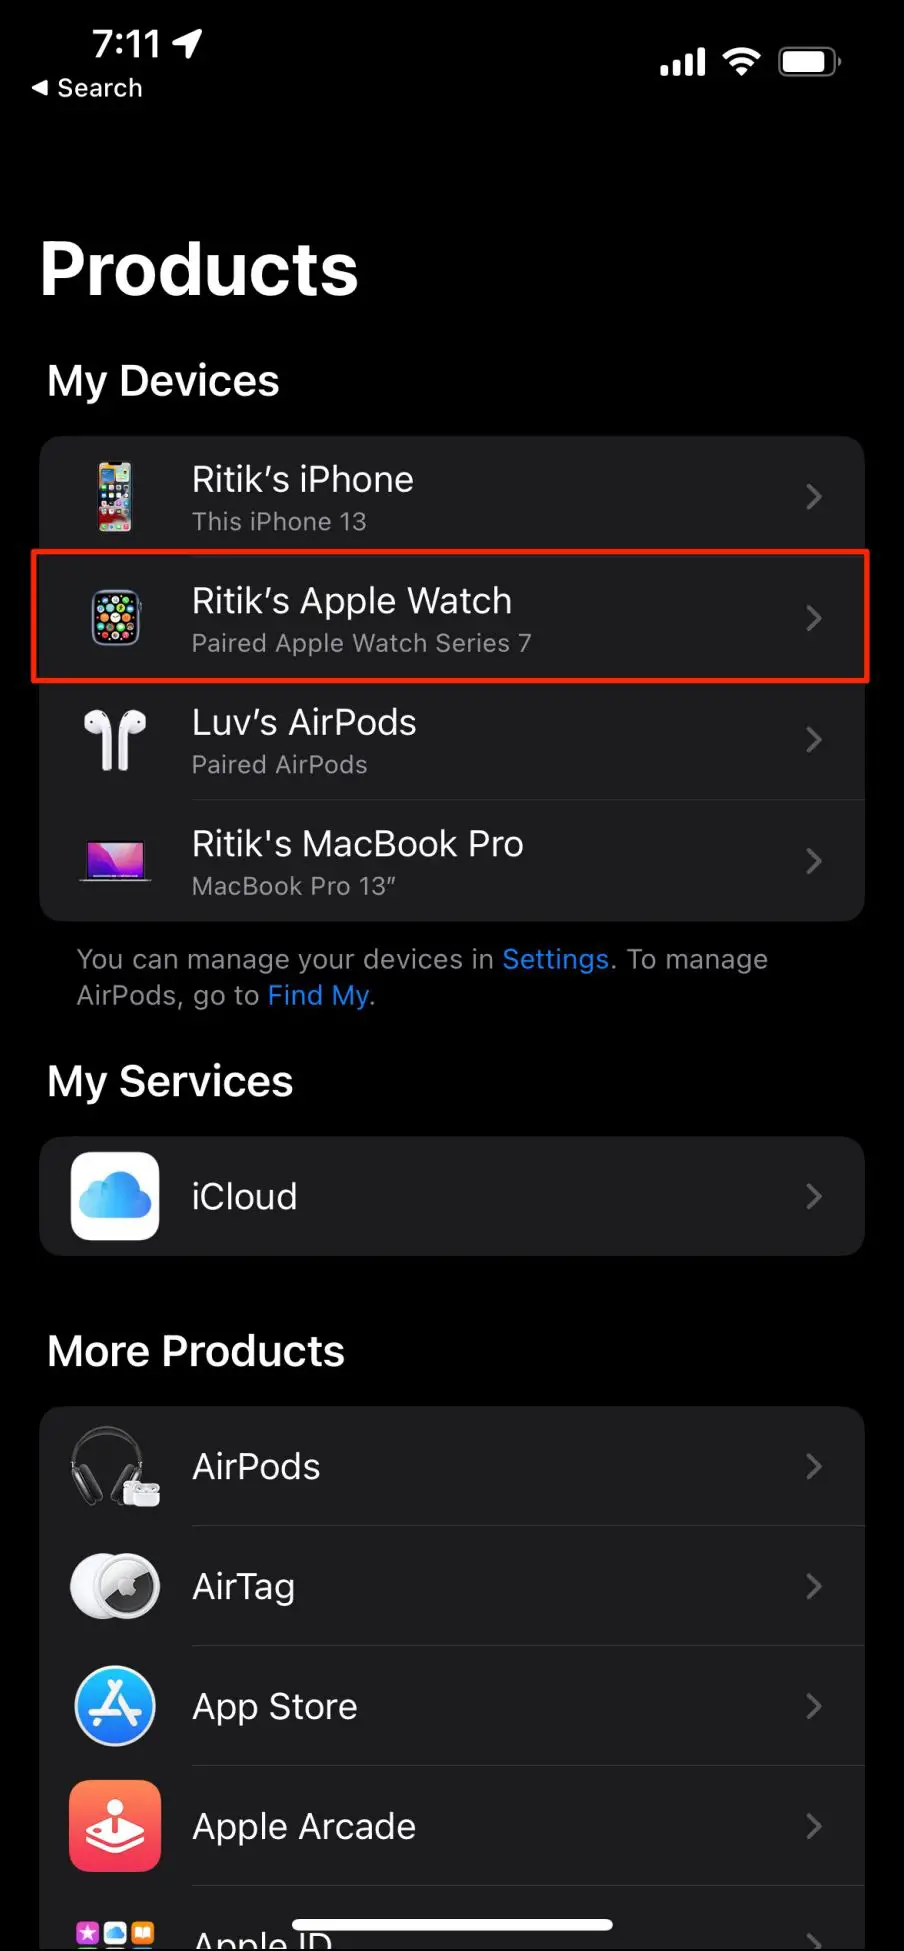 Check Apple Watch Warranty